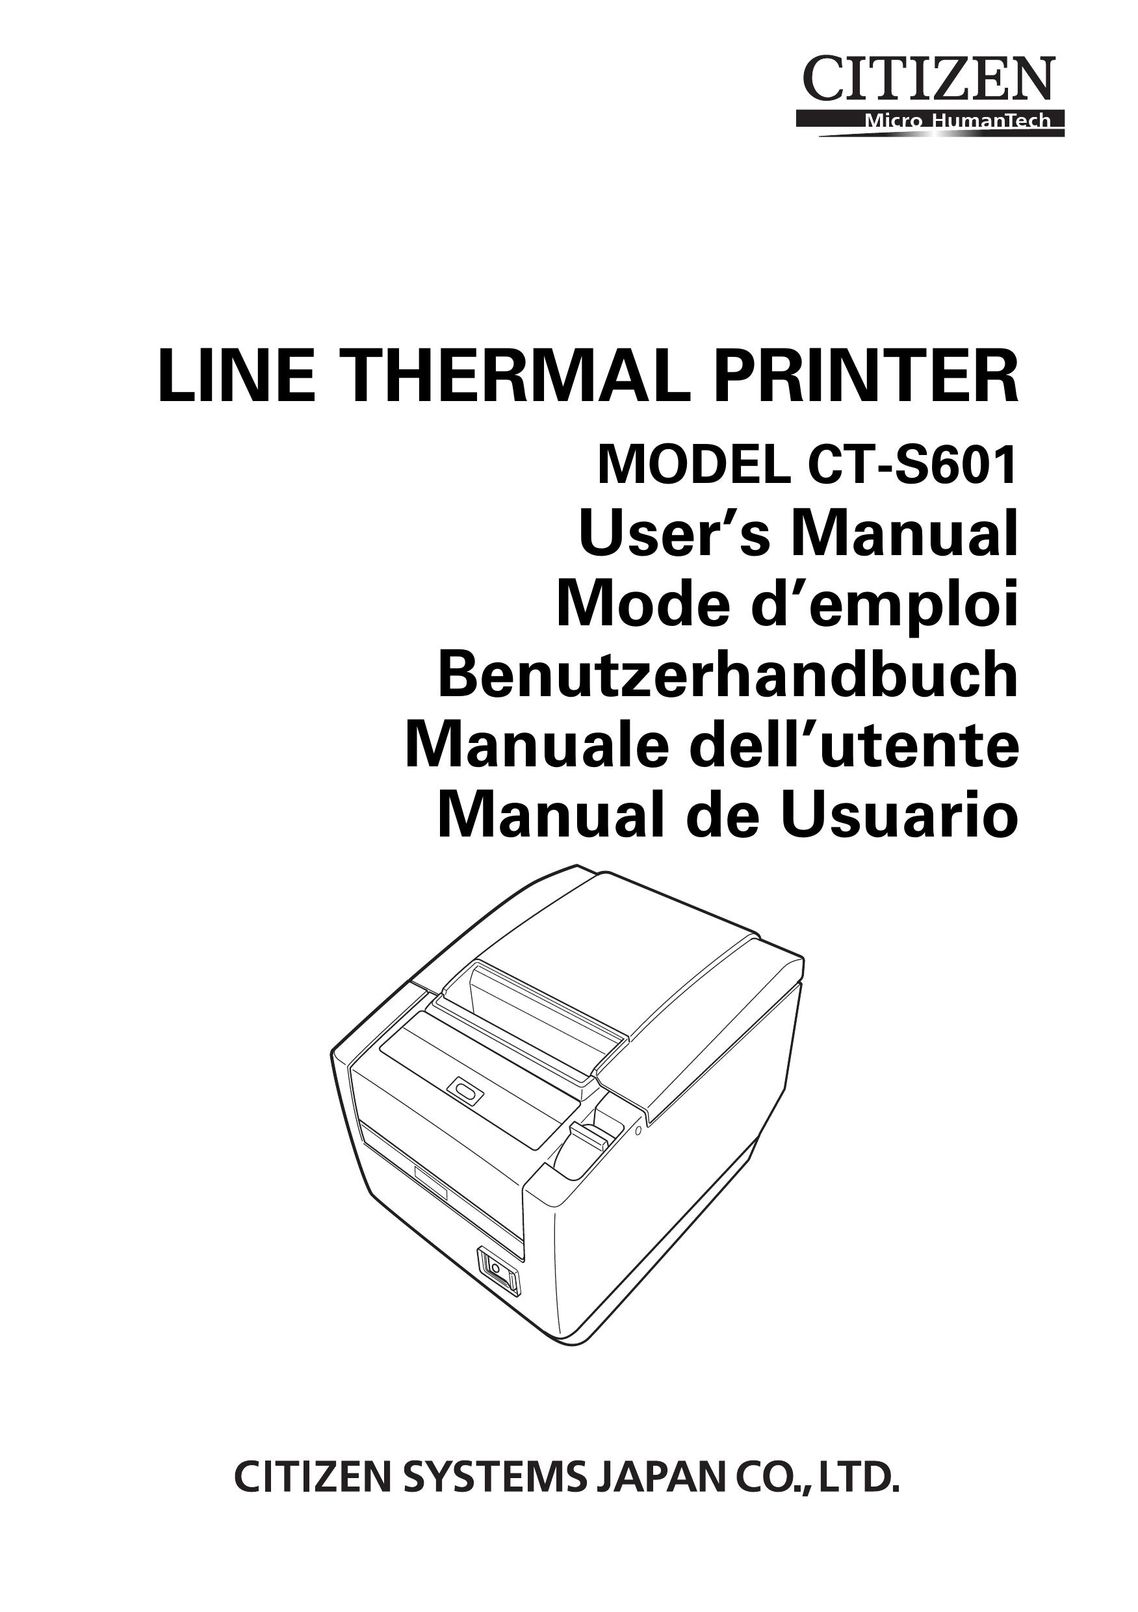 Citizen CT-S601 Printer User Manual